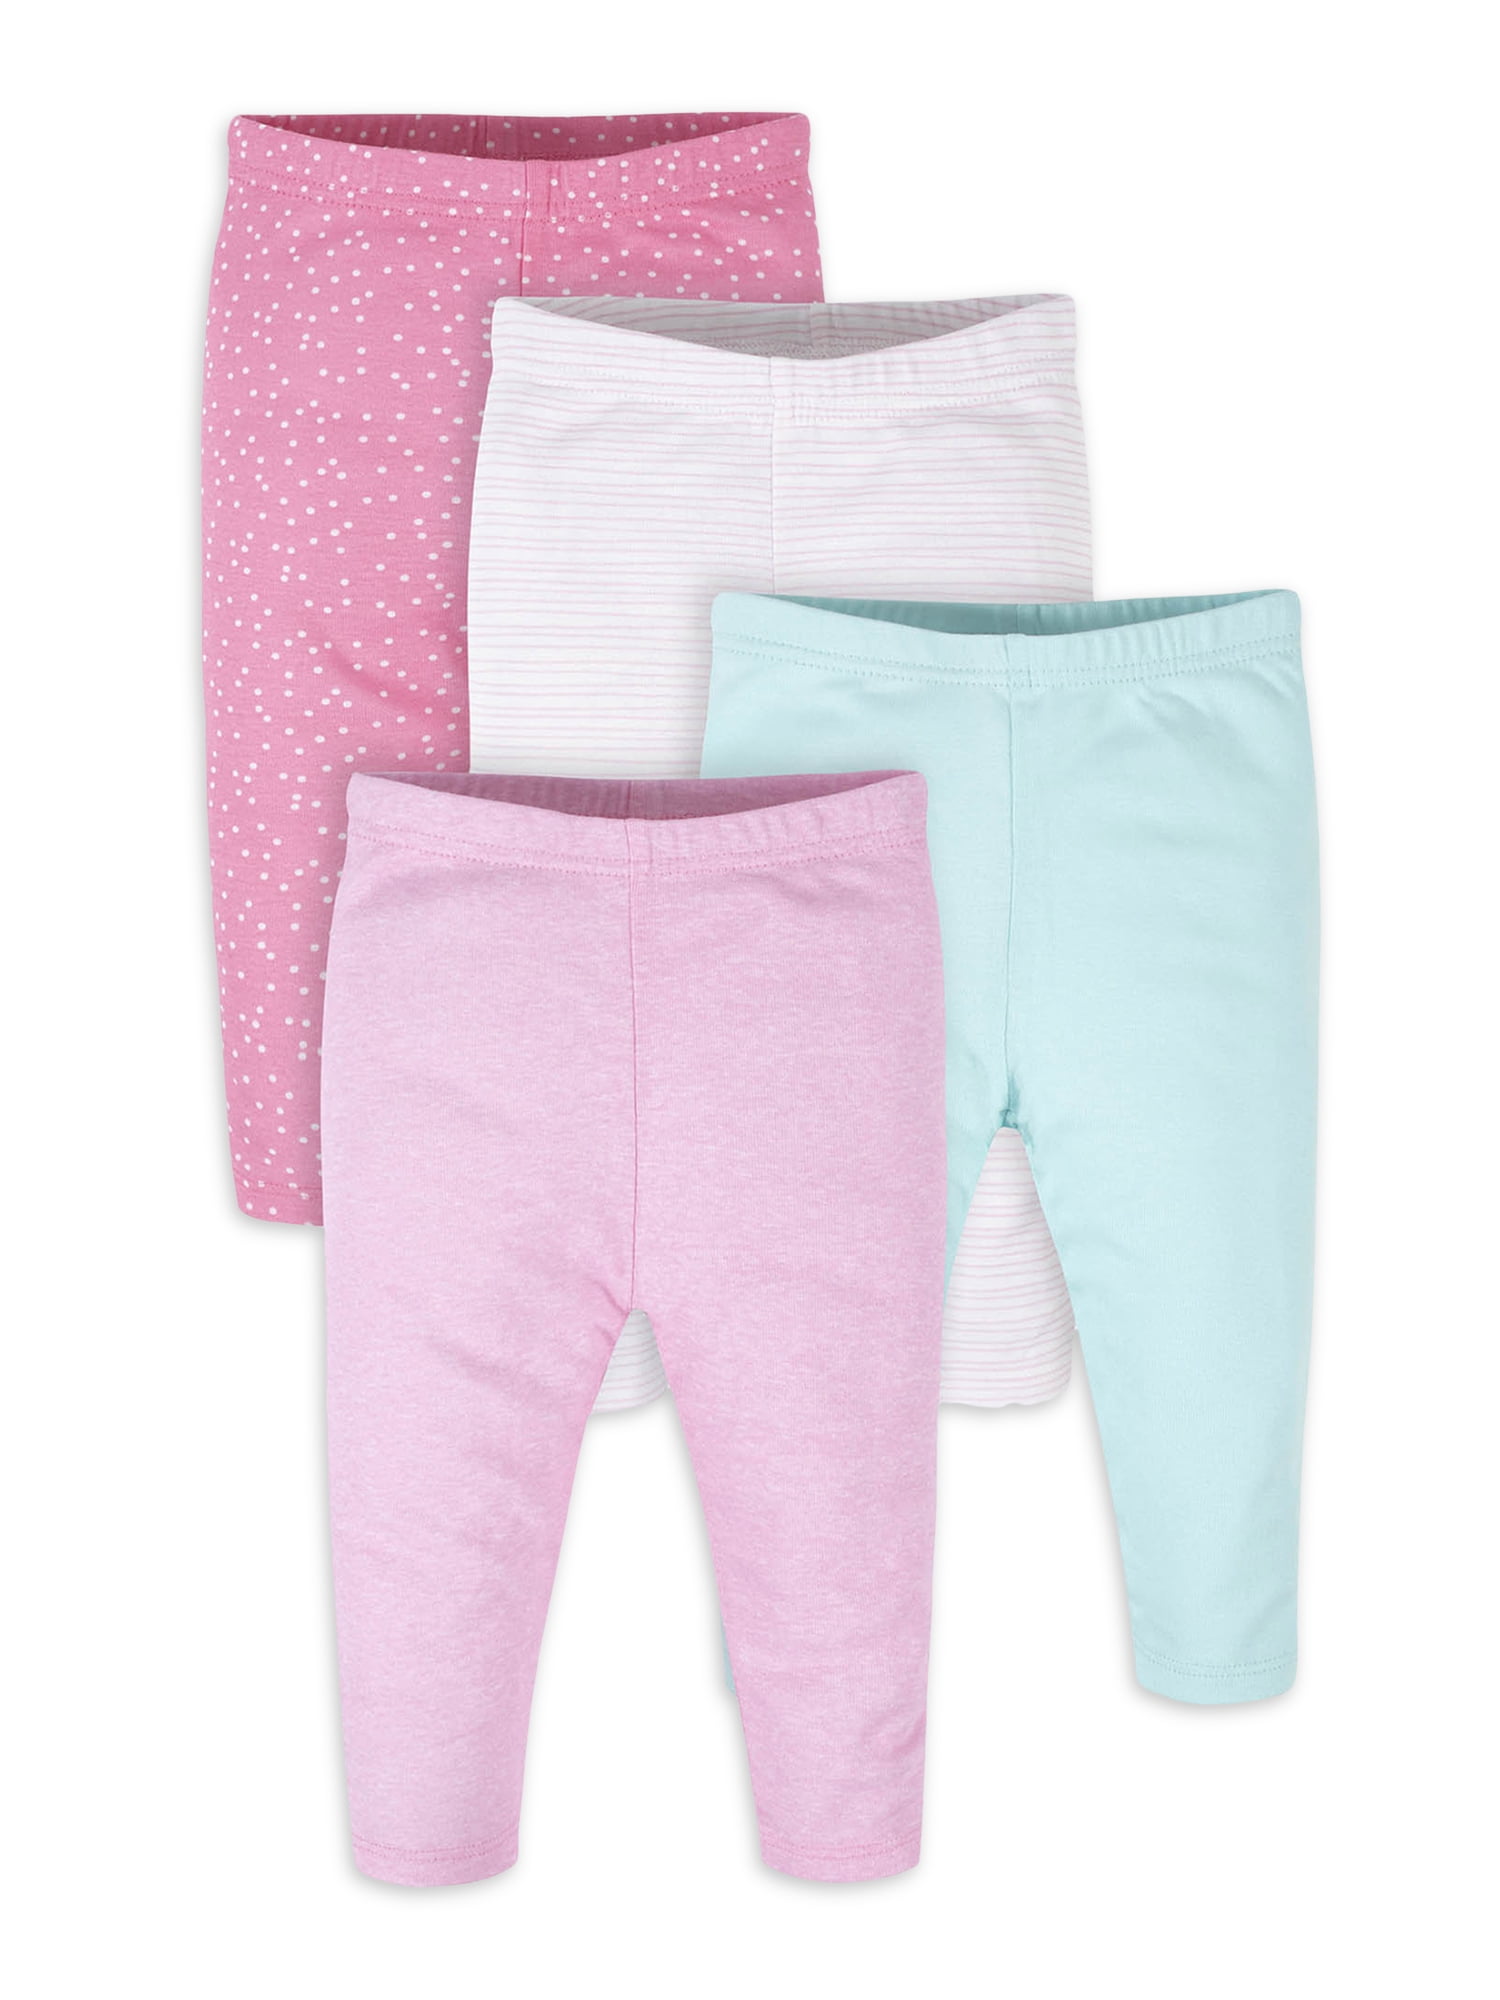 Blue/Pink Dots Gerber Toddler Girls 4 Pack Training Pants 2T 